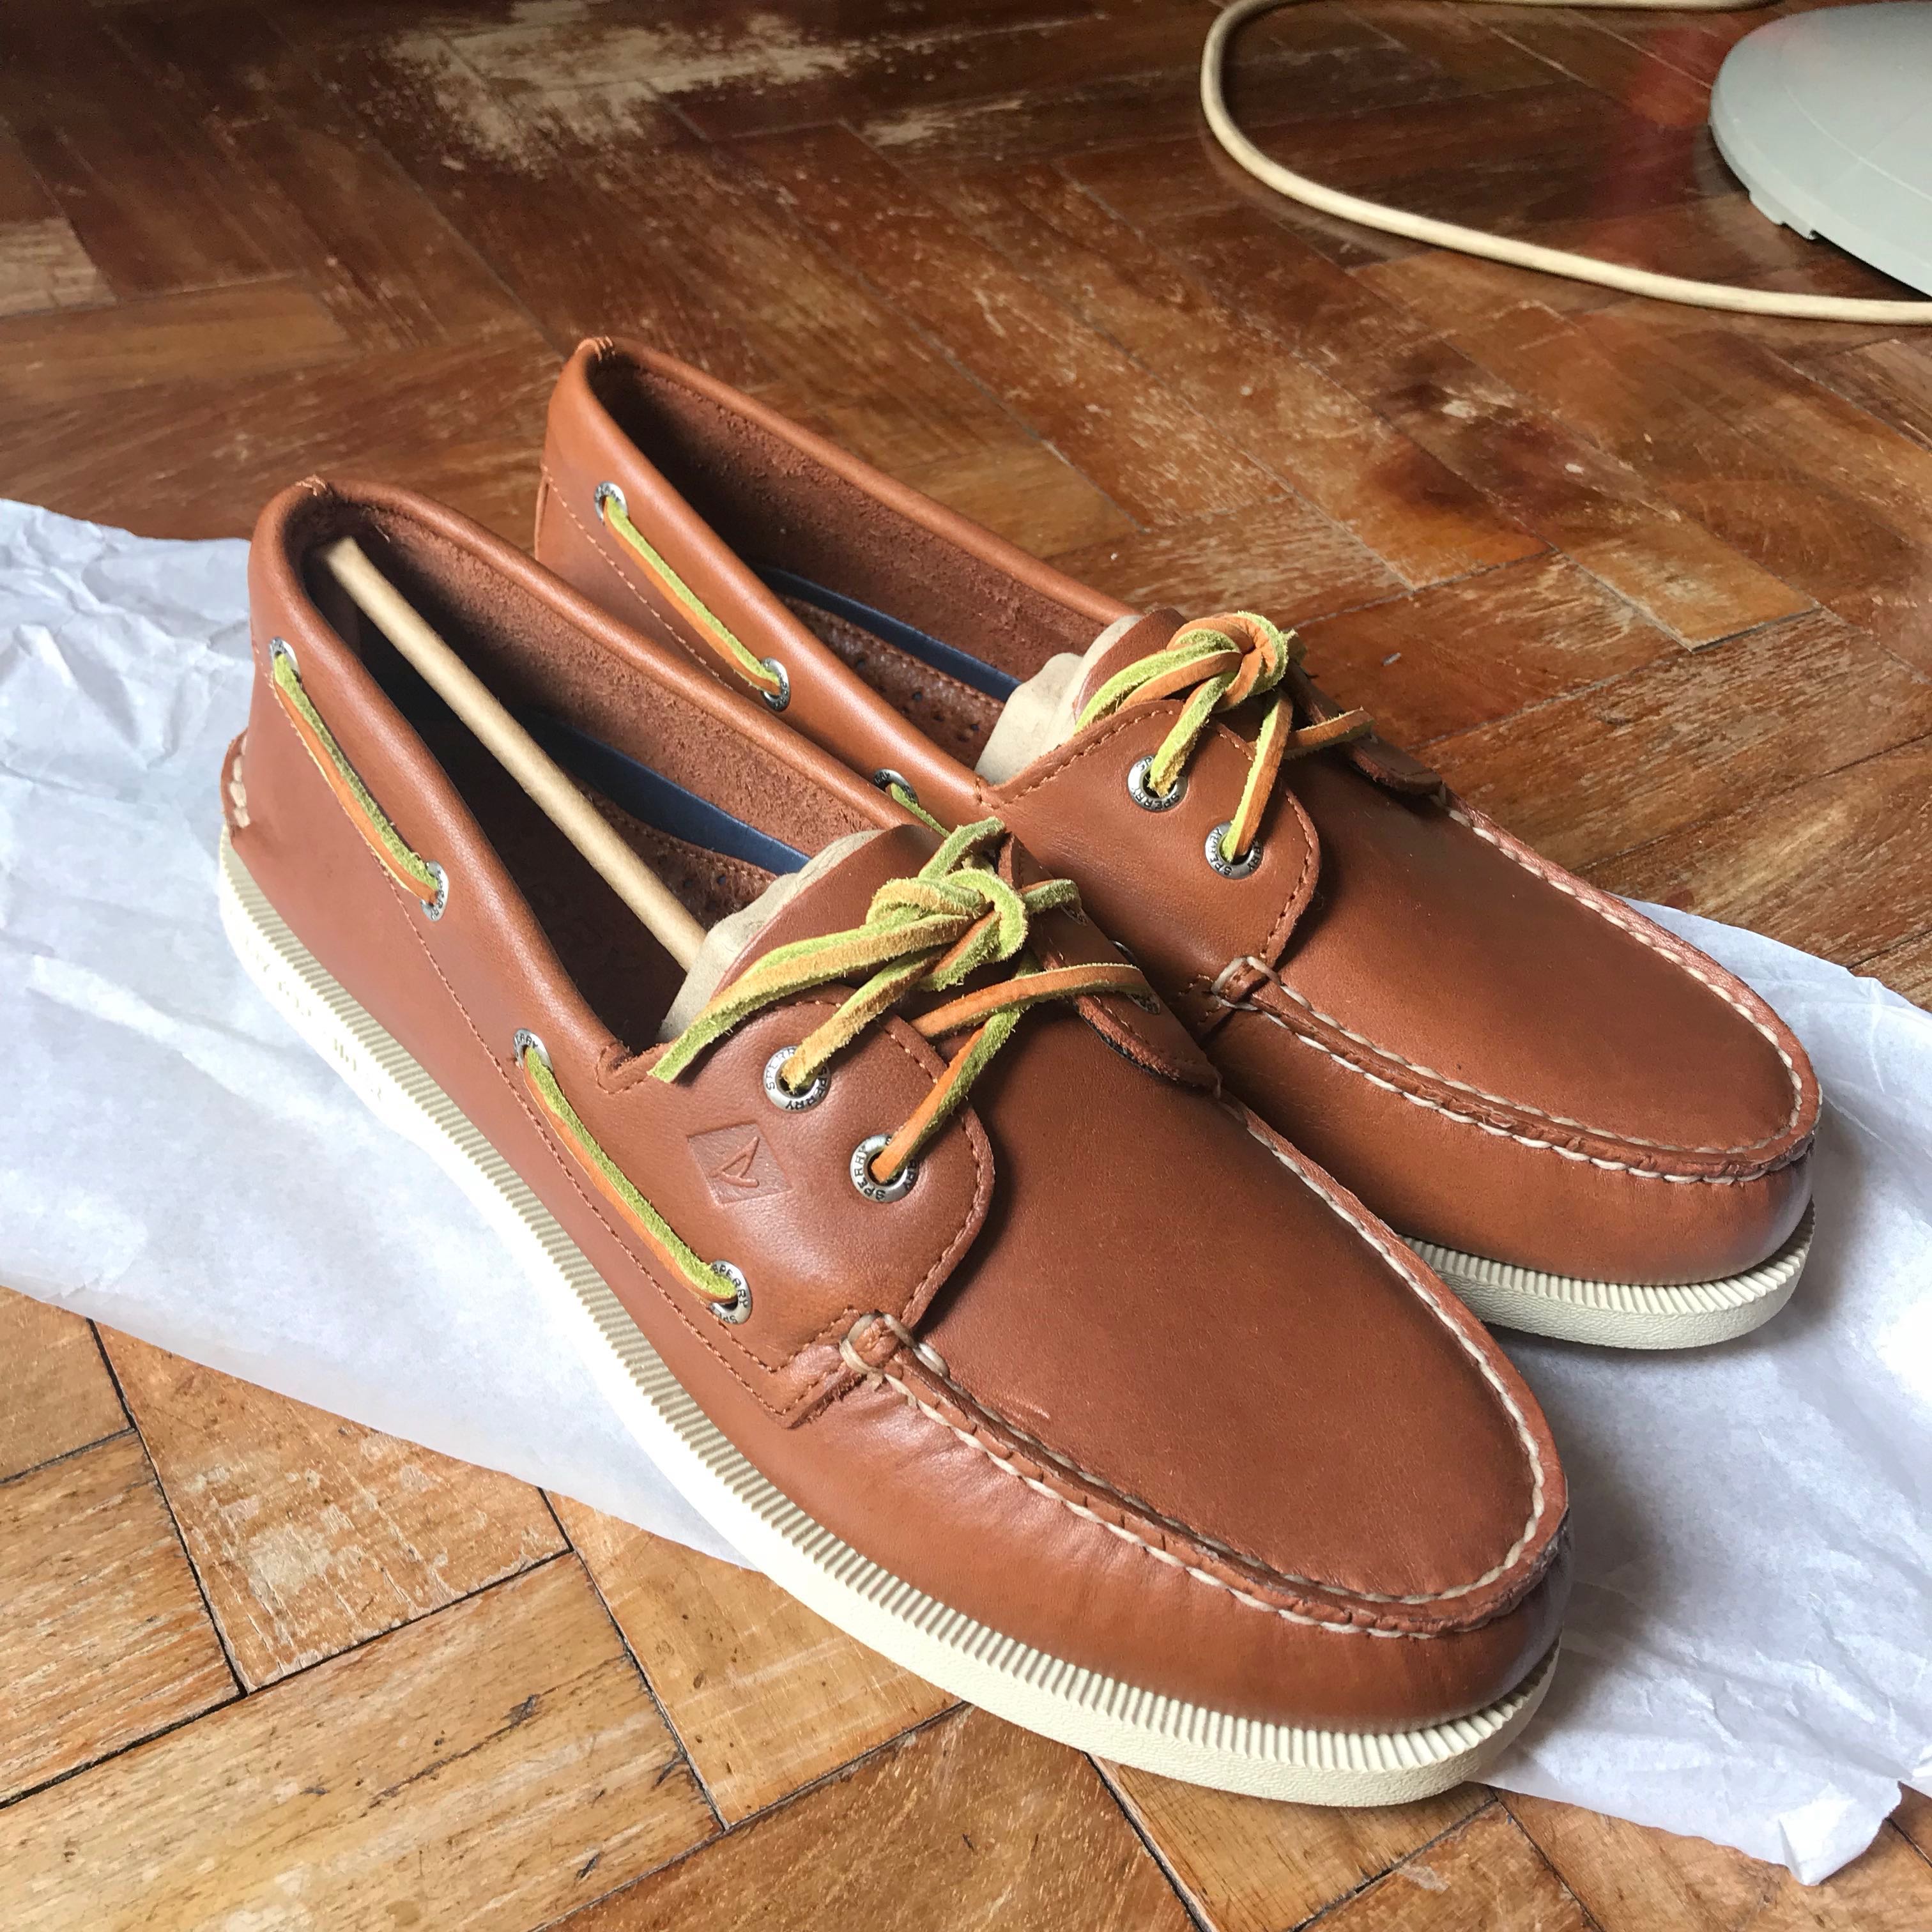 men's authentic original leather boat shoe